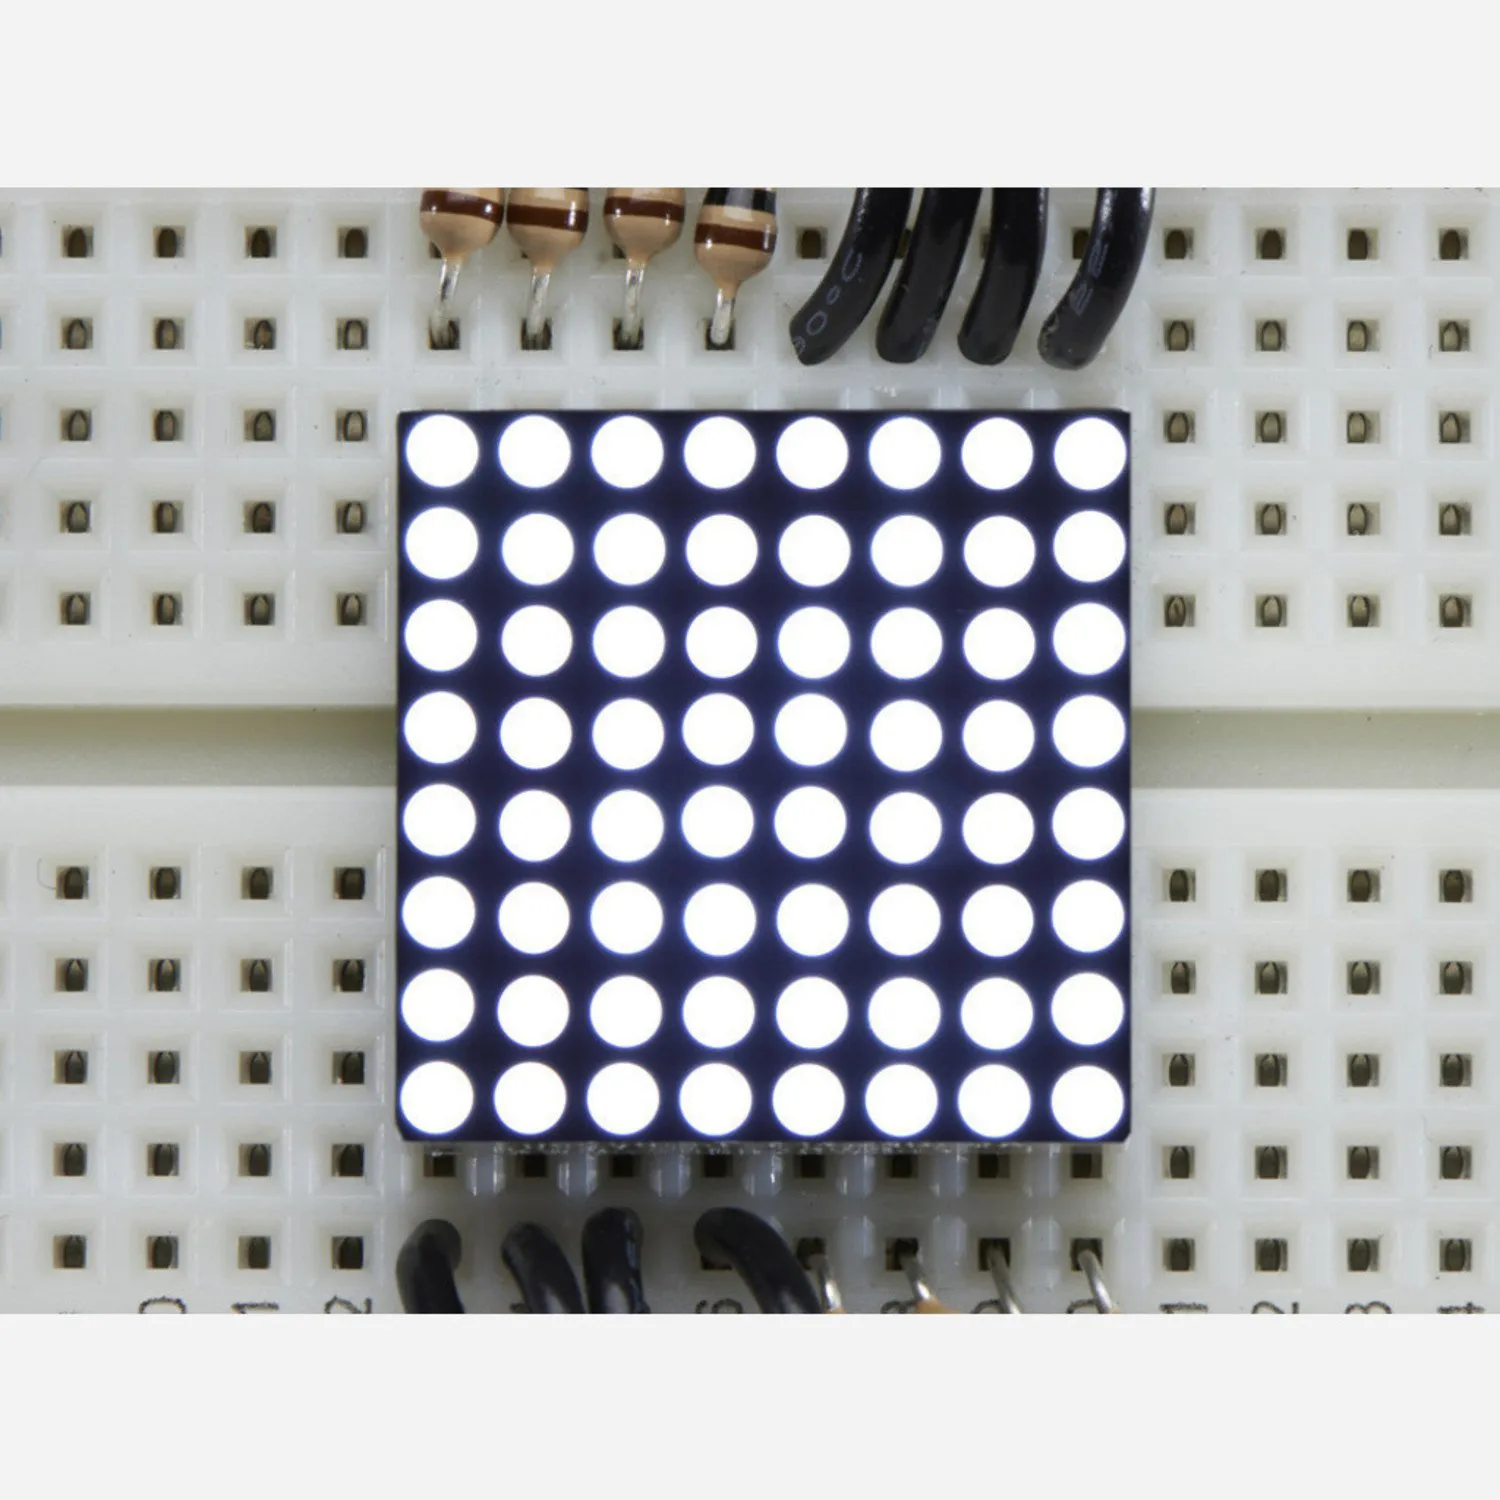 Photo of Miniature Ultra-Bright 8x8 White LED Matrix